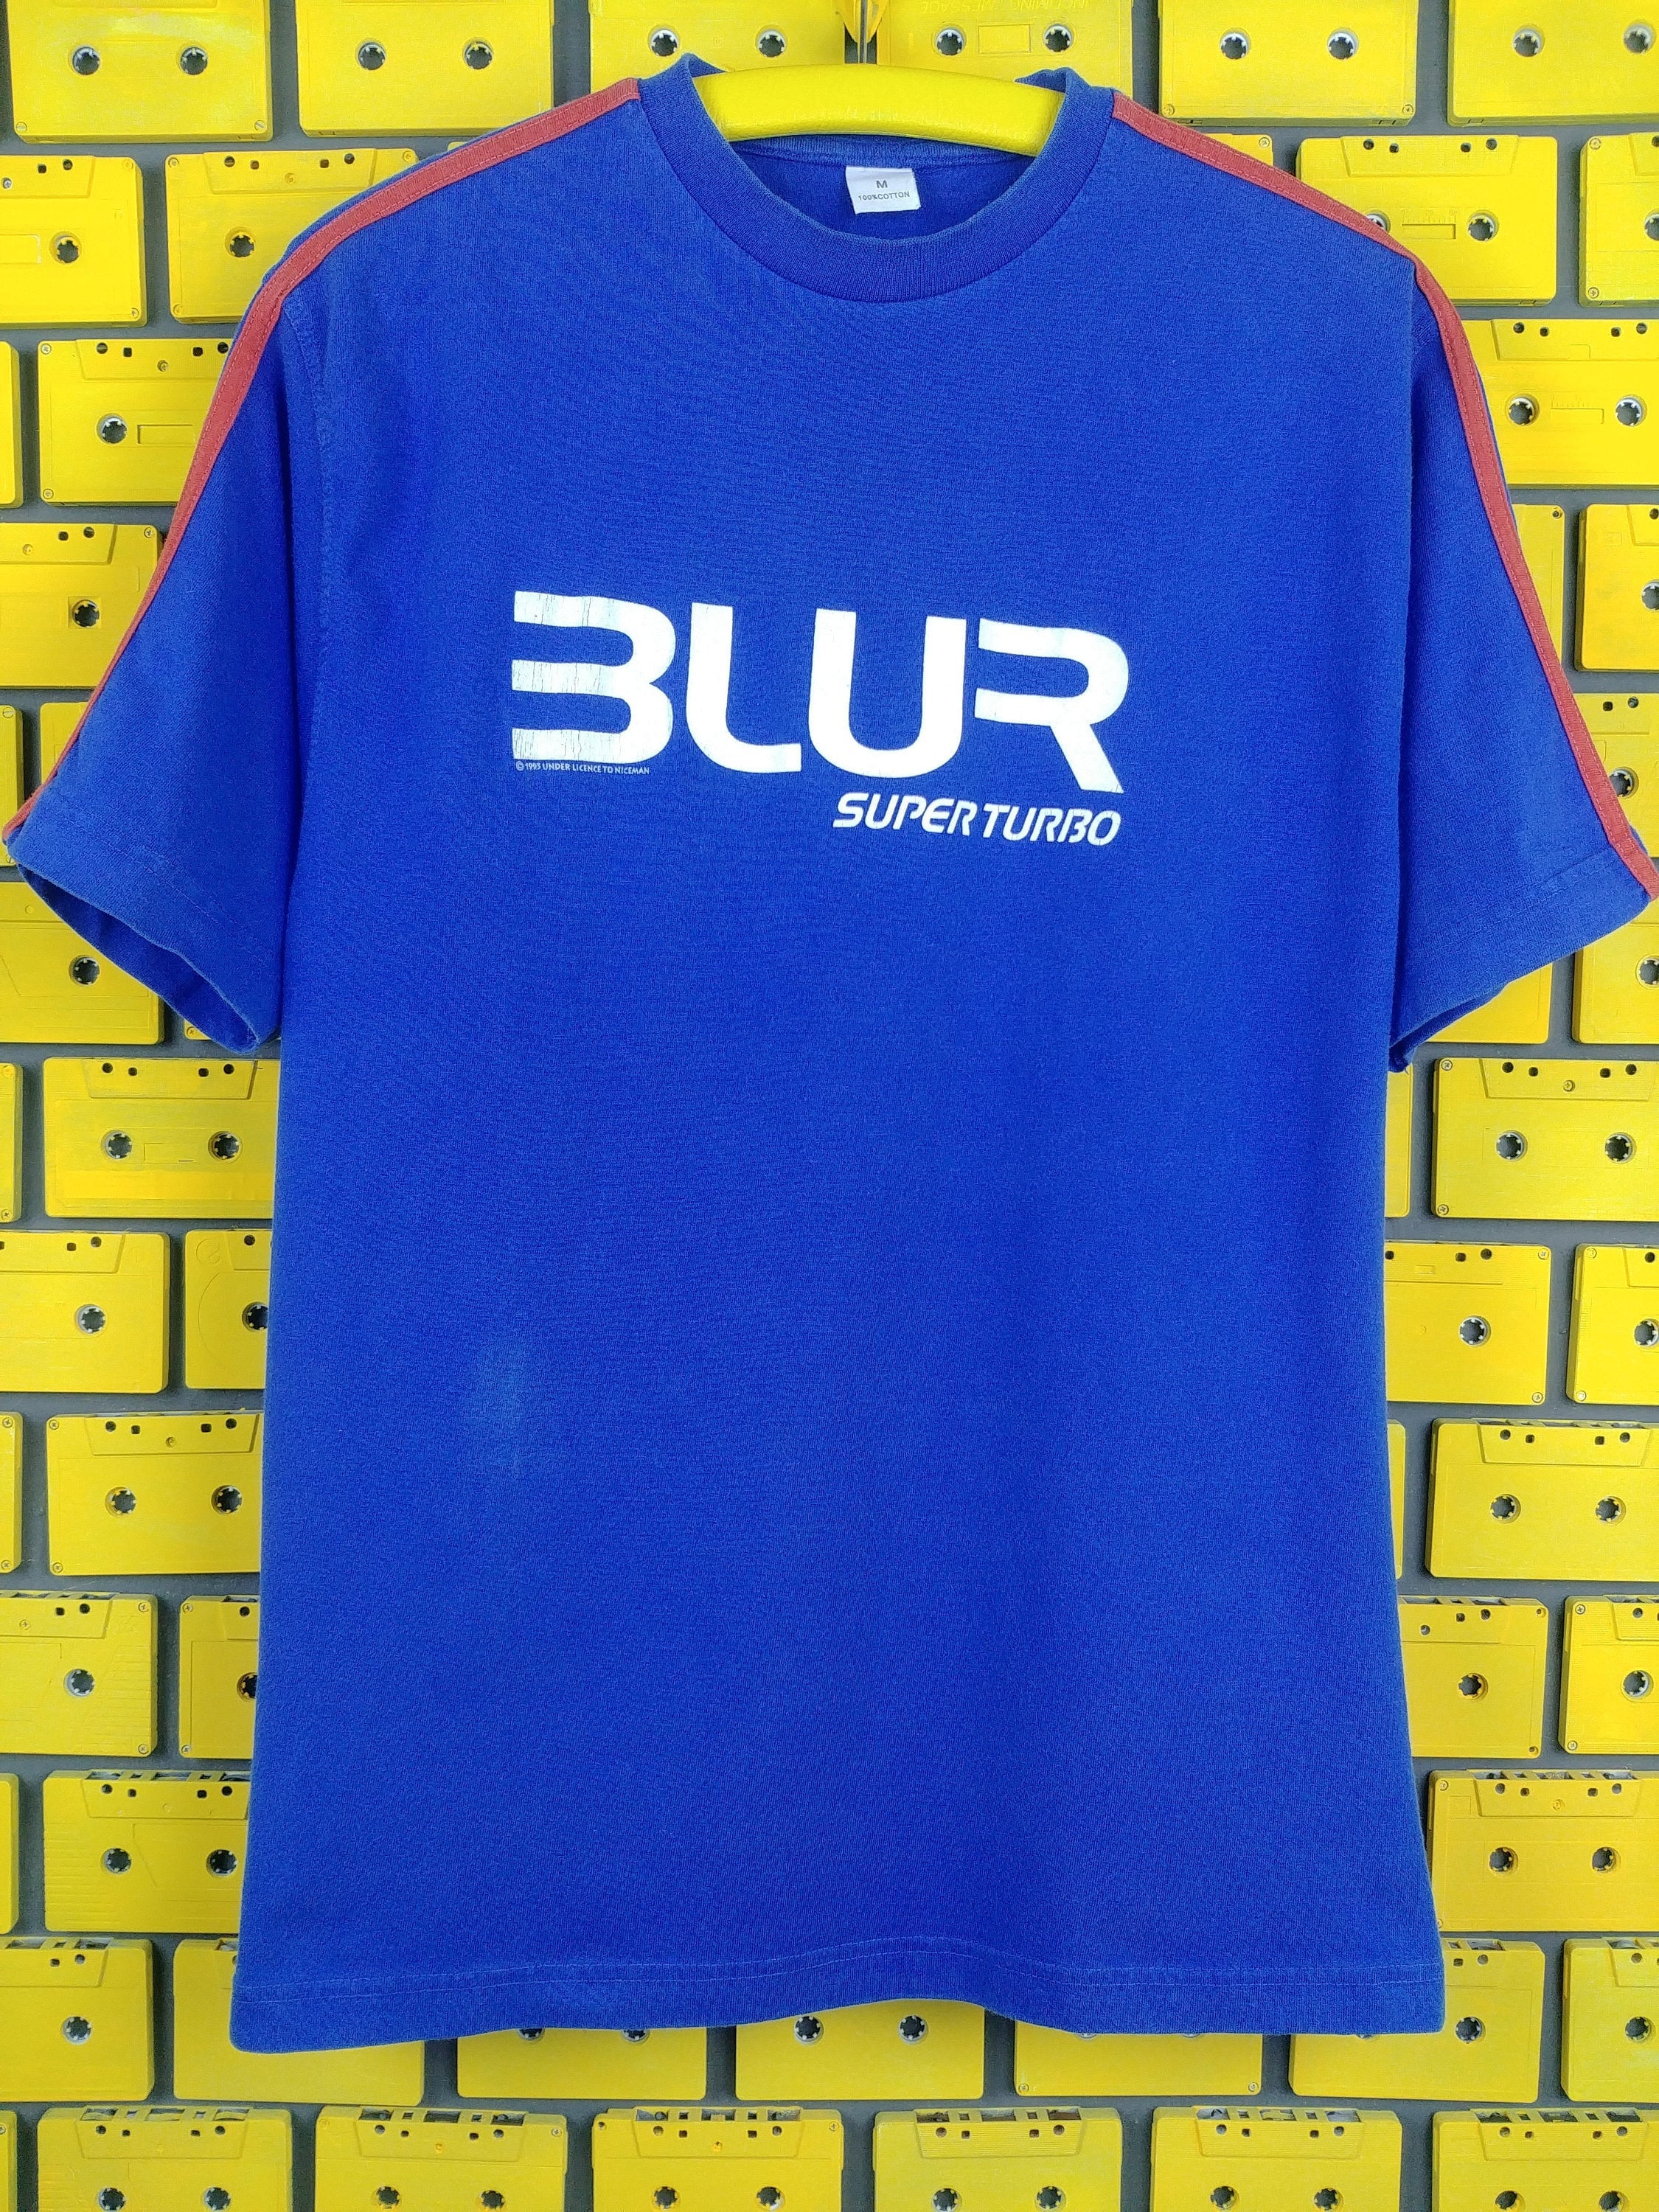 Vintage 1995 Blur Band T-Shirt Britpop Indie Rock Super Turbo Album Promo Tour Merch Tee Size M